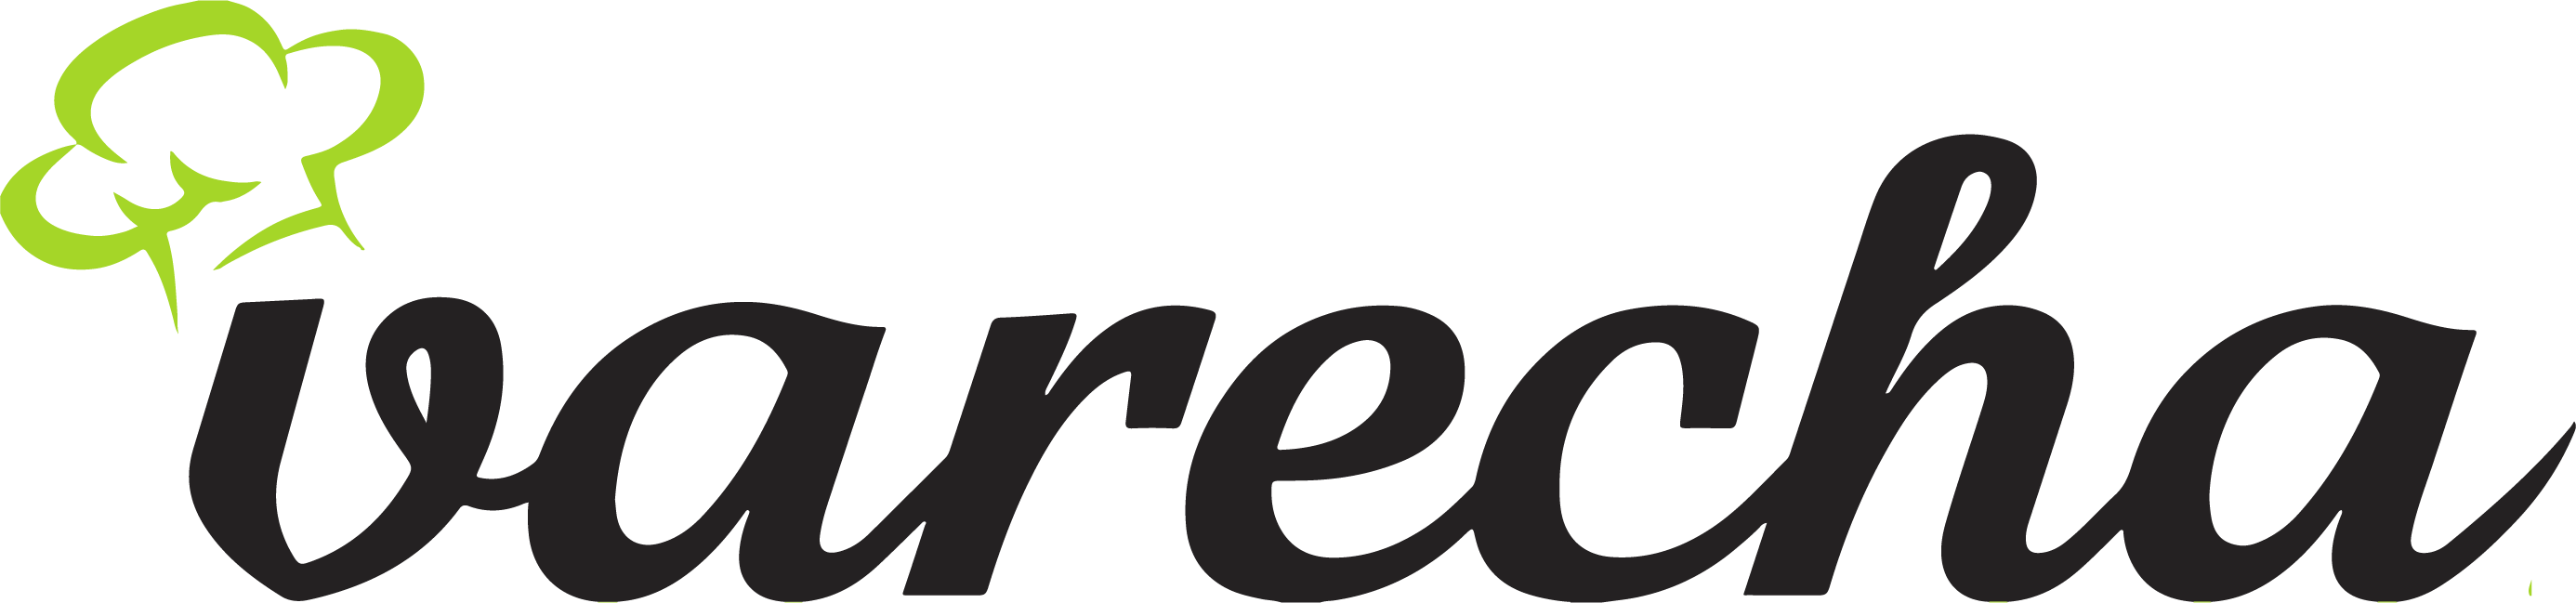 Varecha Logo